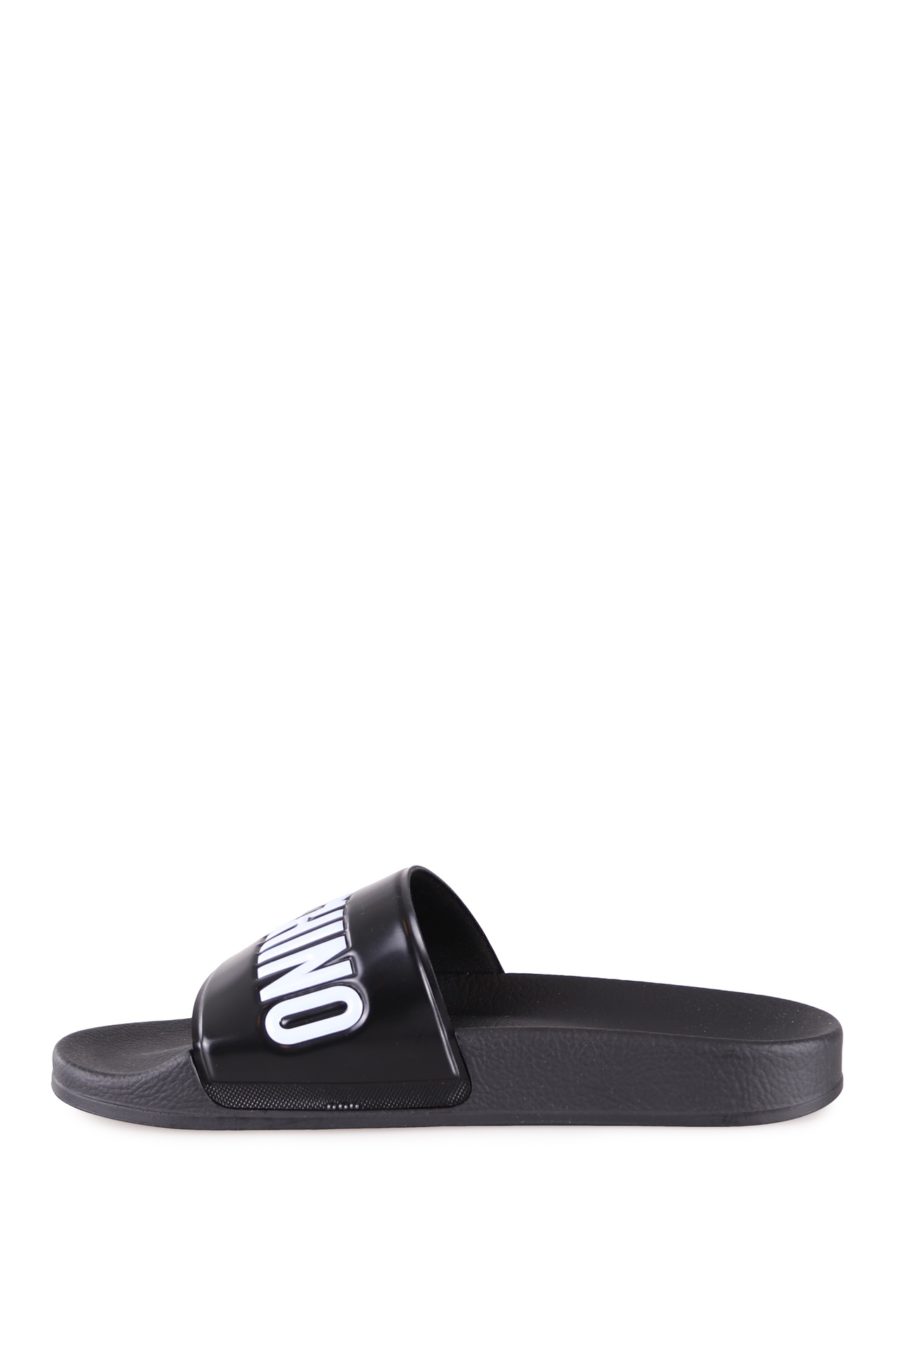 Moschino Couture schwarze Flip Flops mit weißem Logo - f47f4e9c1303464d71e78d354df51ffbb0e6114e